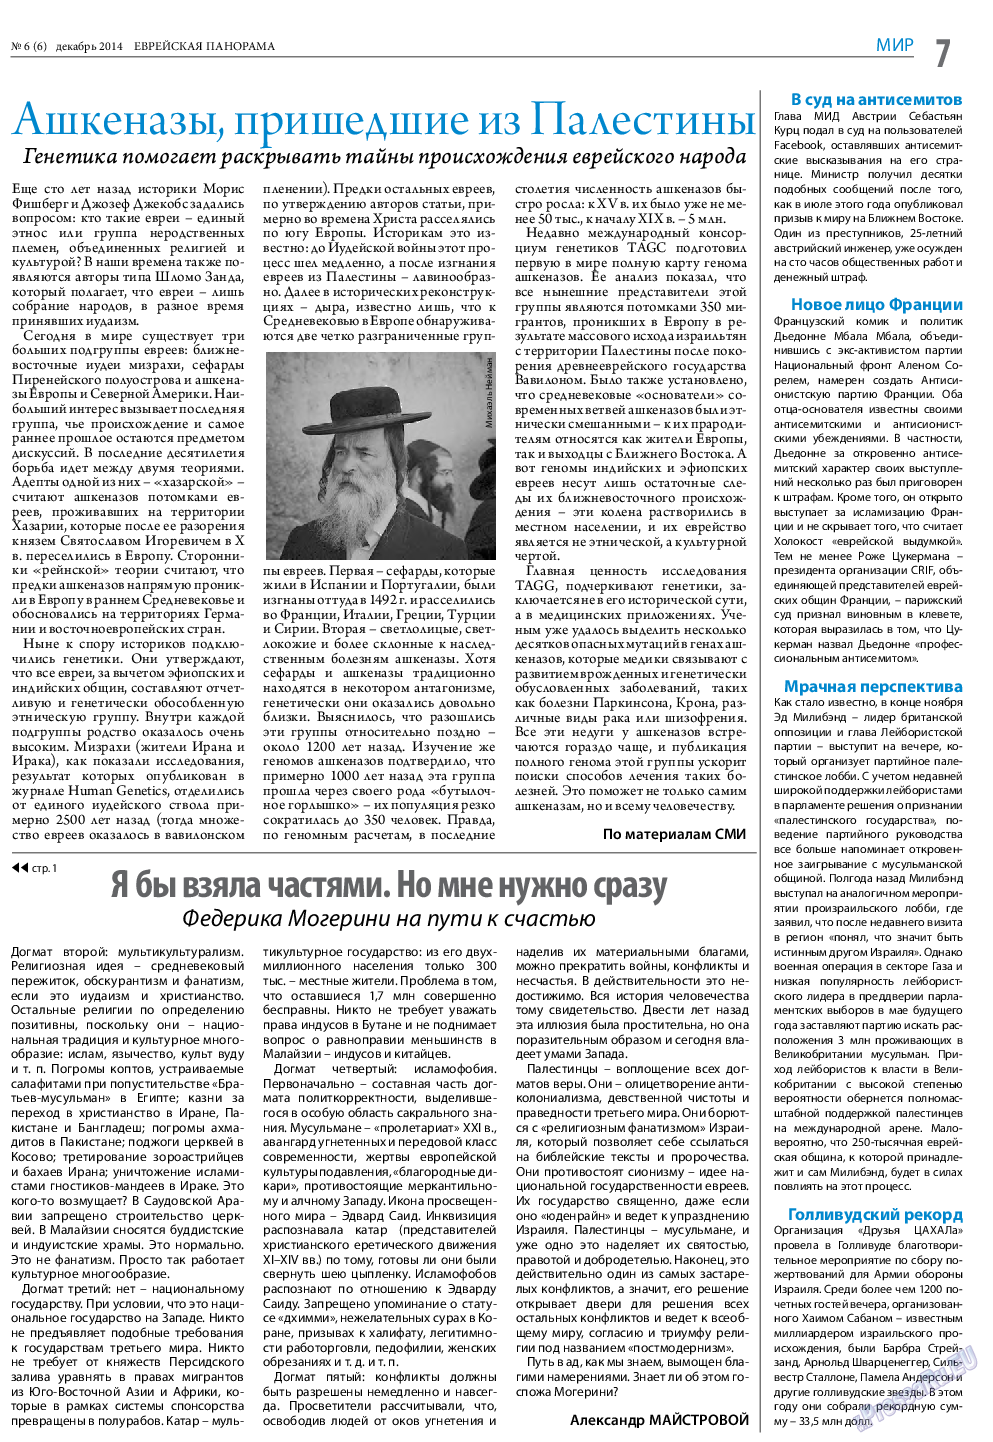 Еврейская панорама, газета. 2014 №6 стр.7